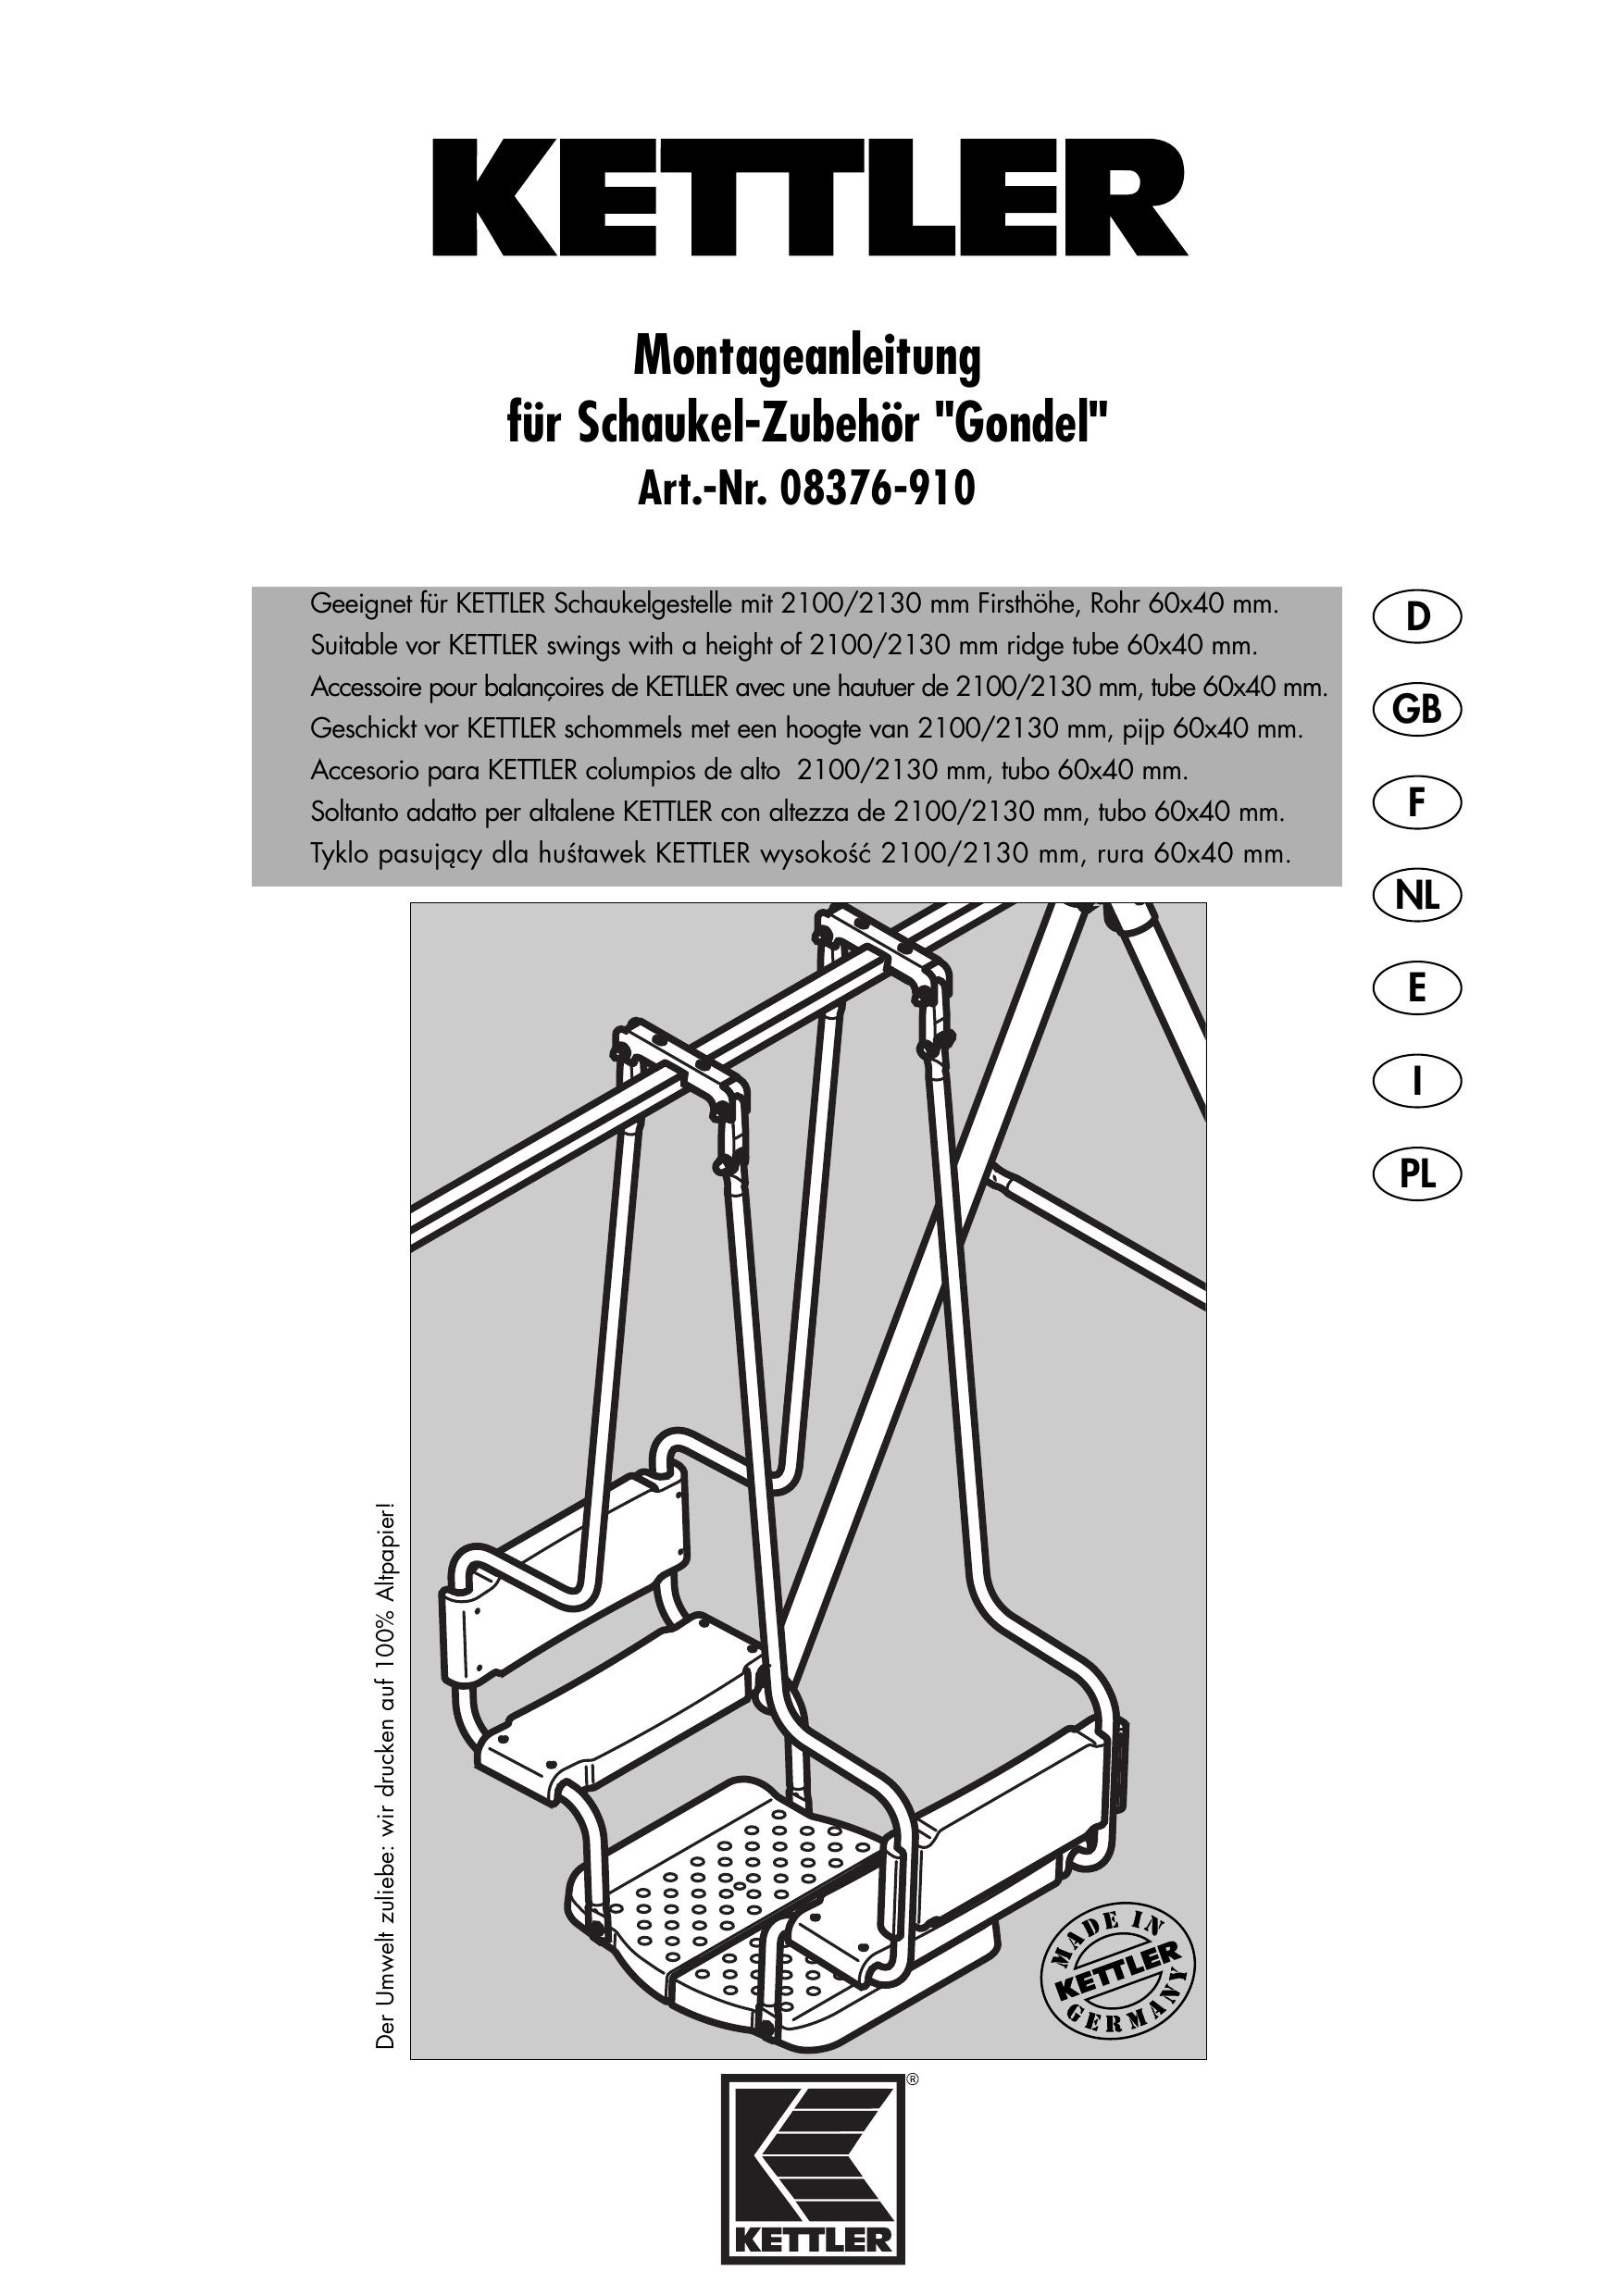 Kettler 08376-910 Swing Sets User Manual